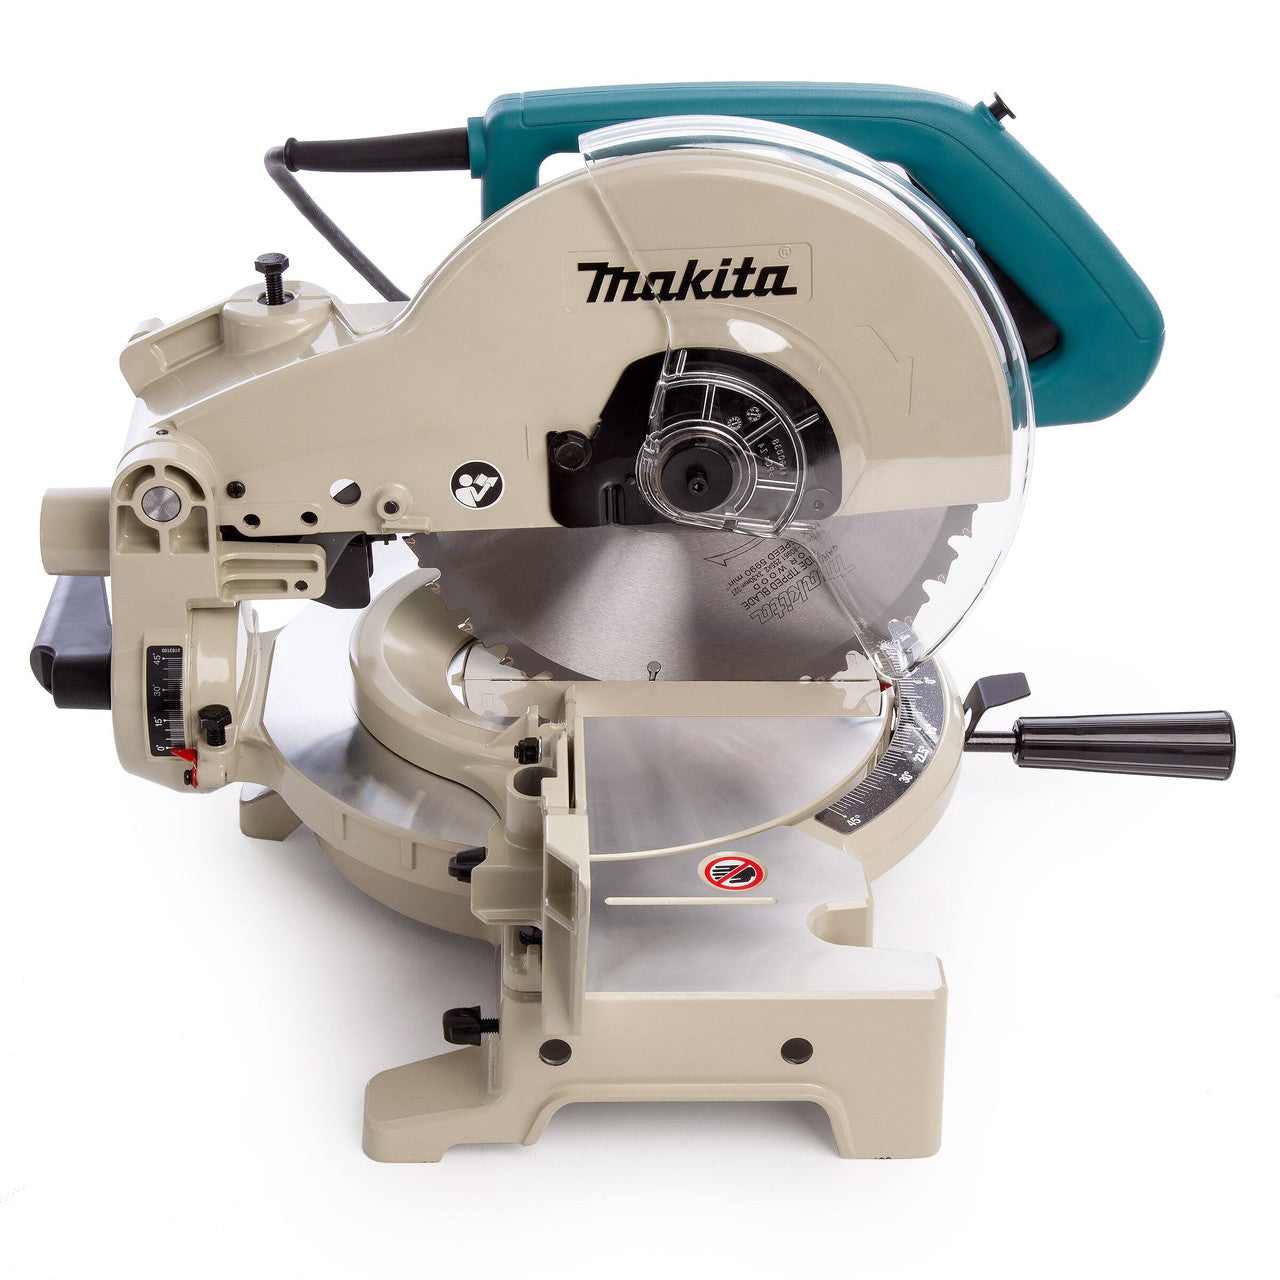 Makita LS1040N 260mm Mitre Saw (110V)